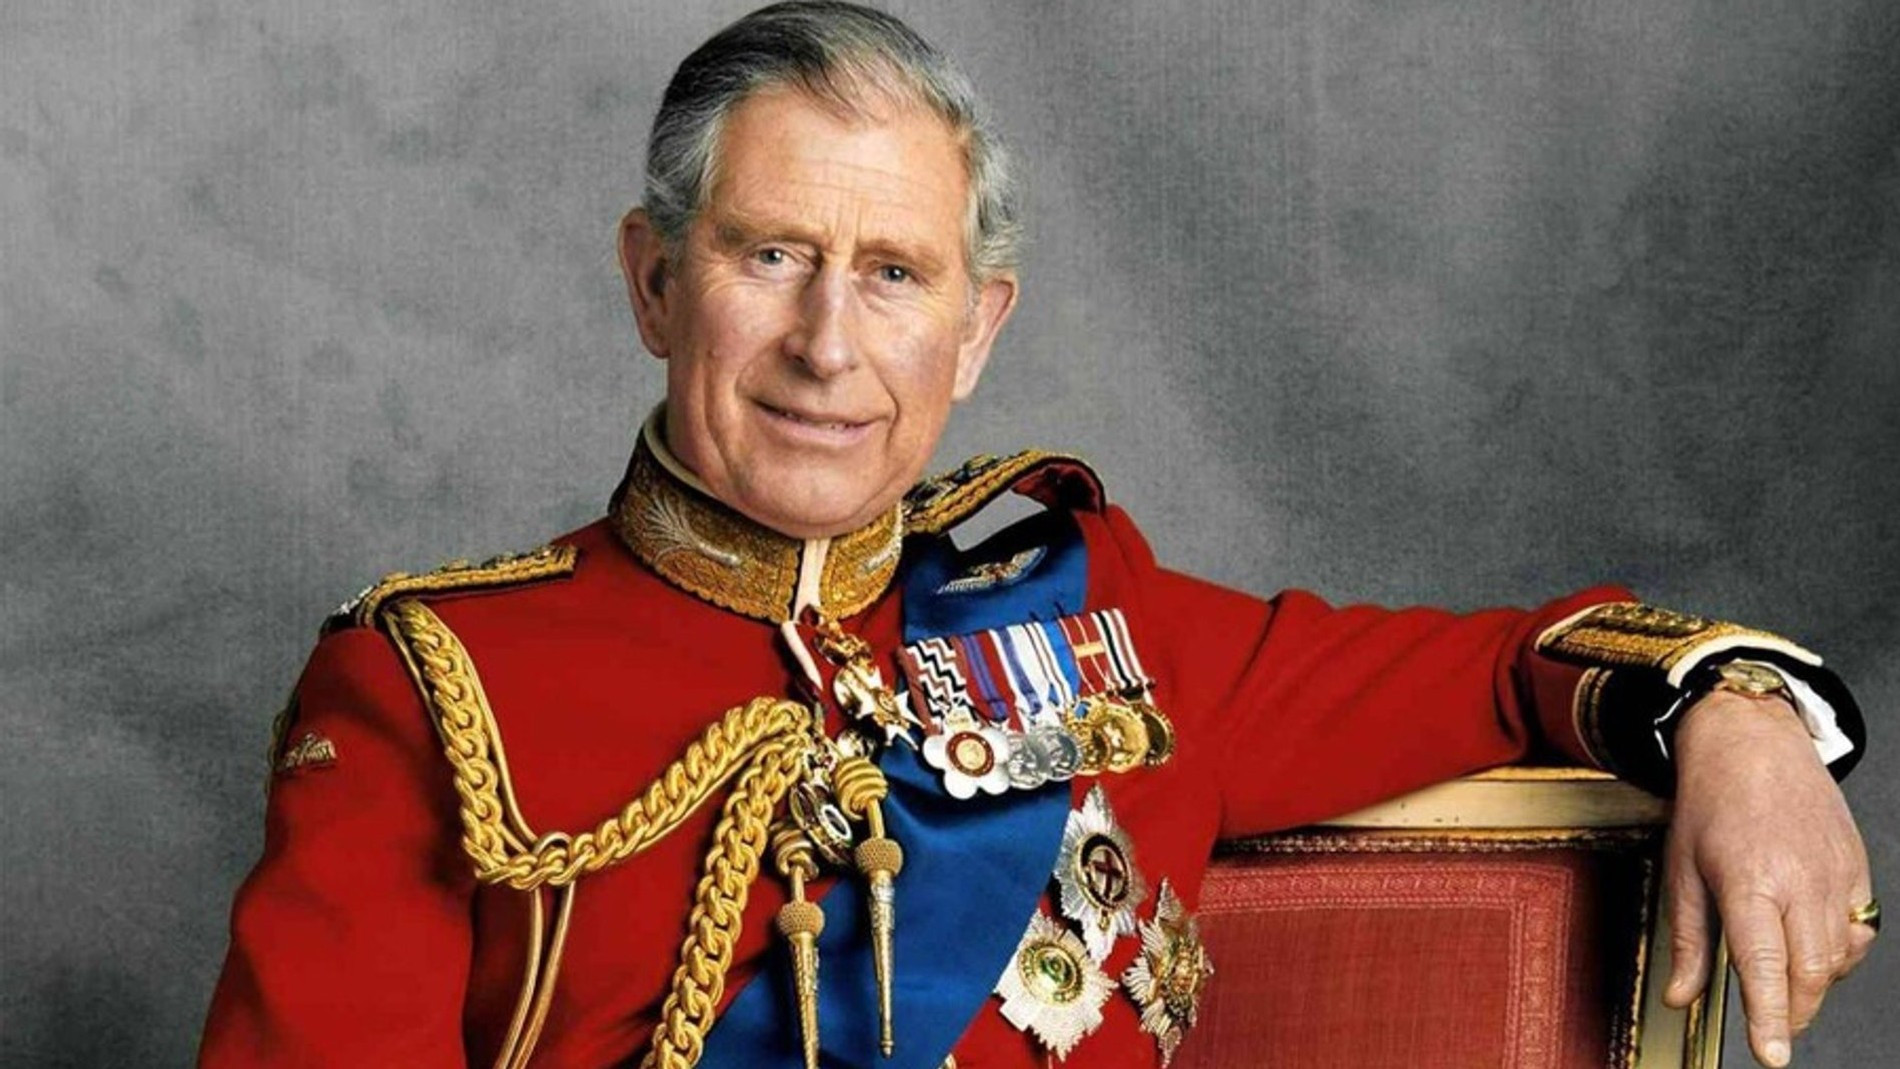 Король Карл III
Фото: Getty Images